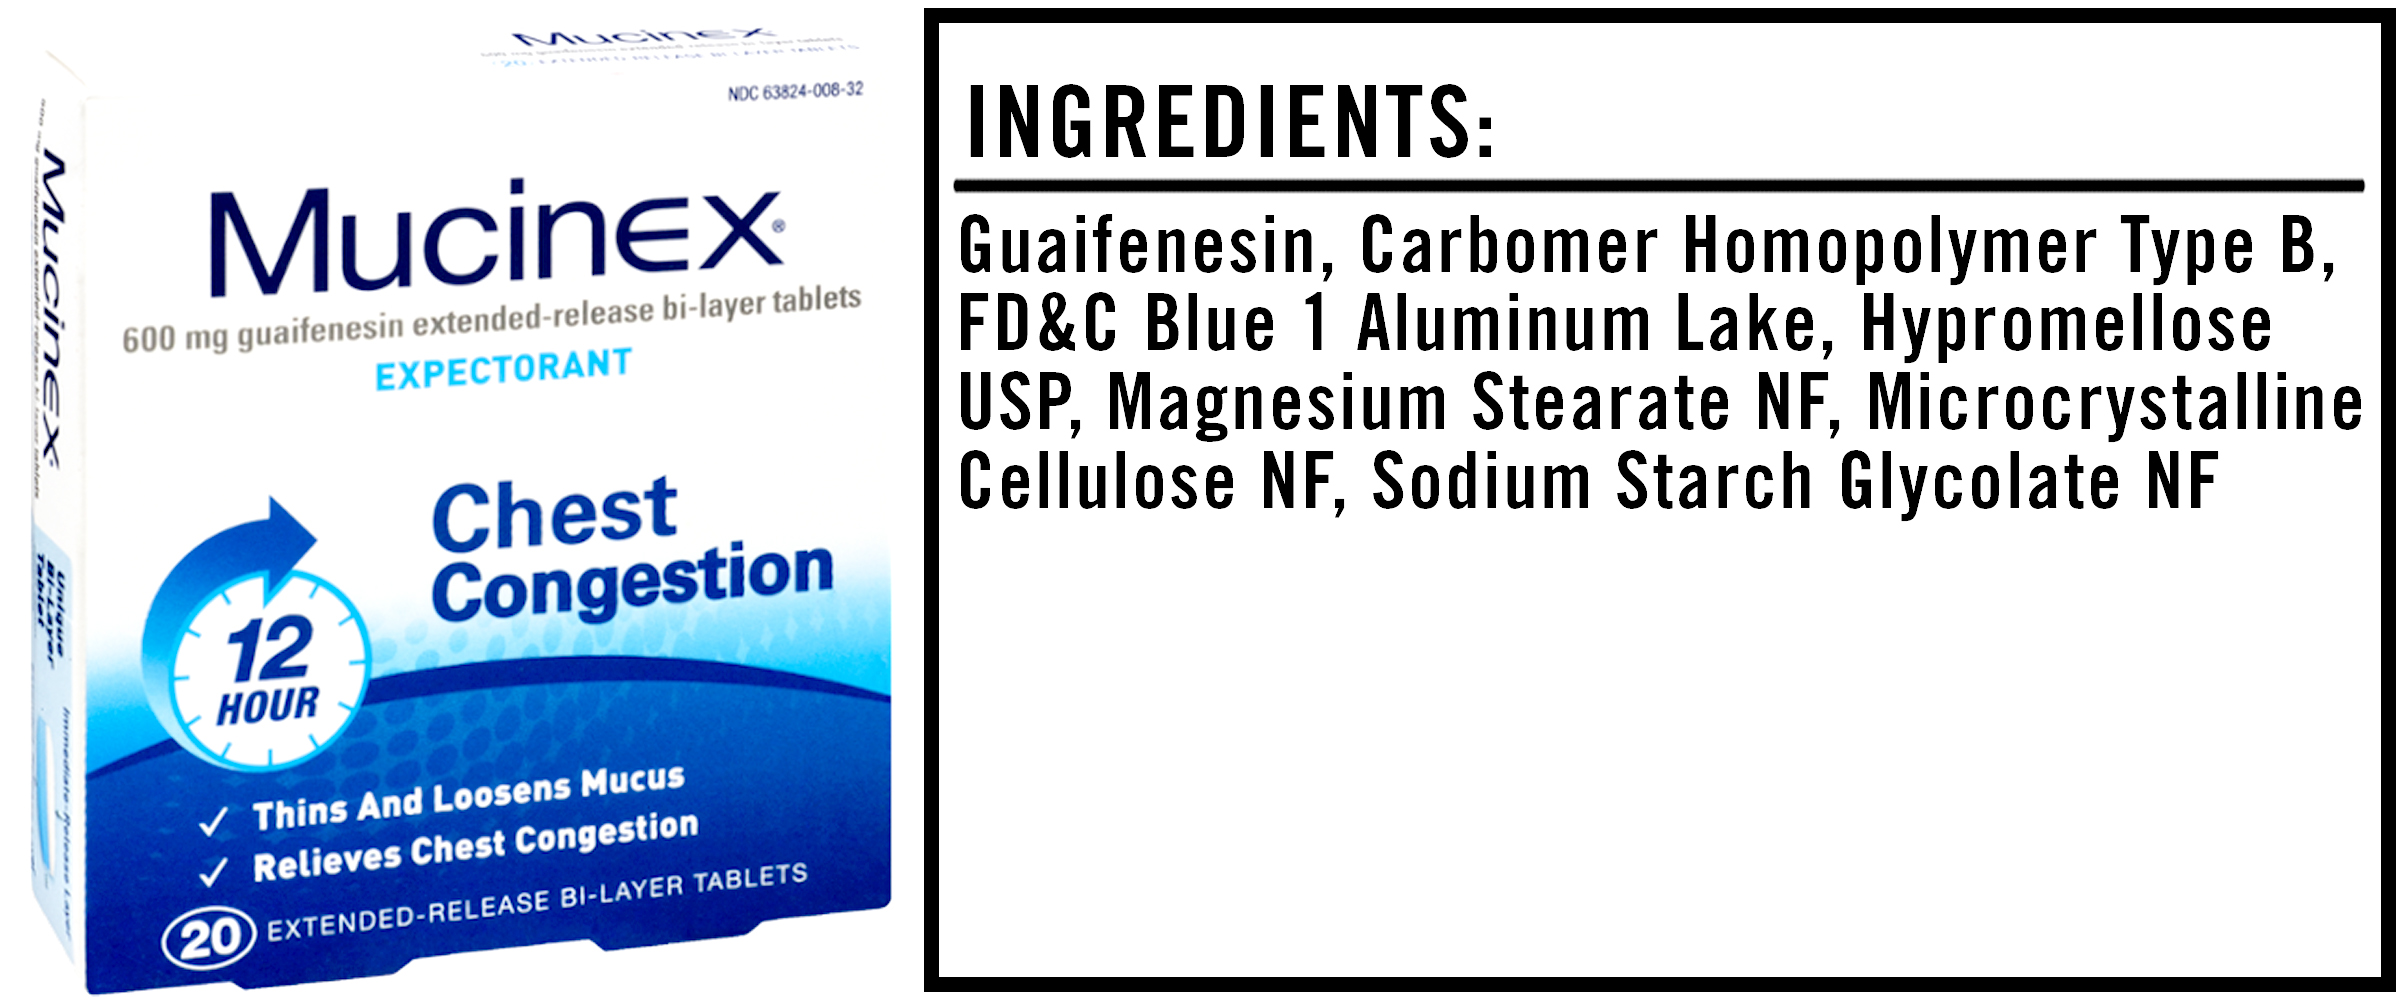 Mucinex Ingredients: A Comprehensive Guide